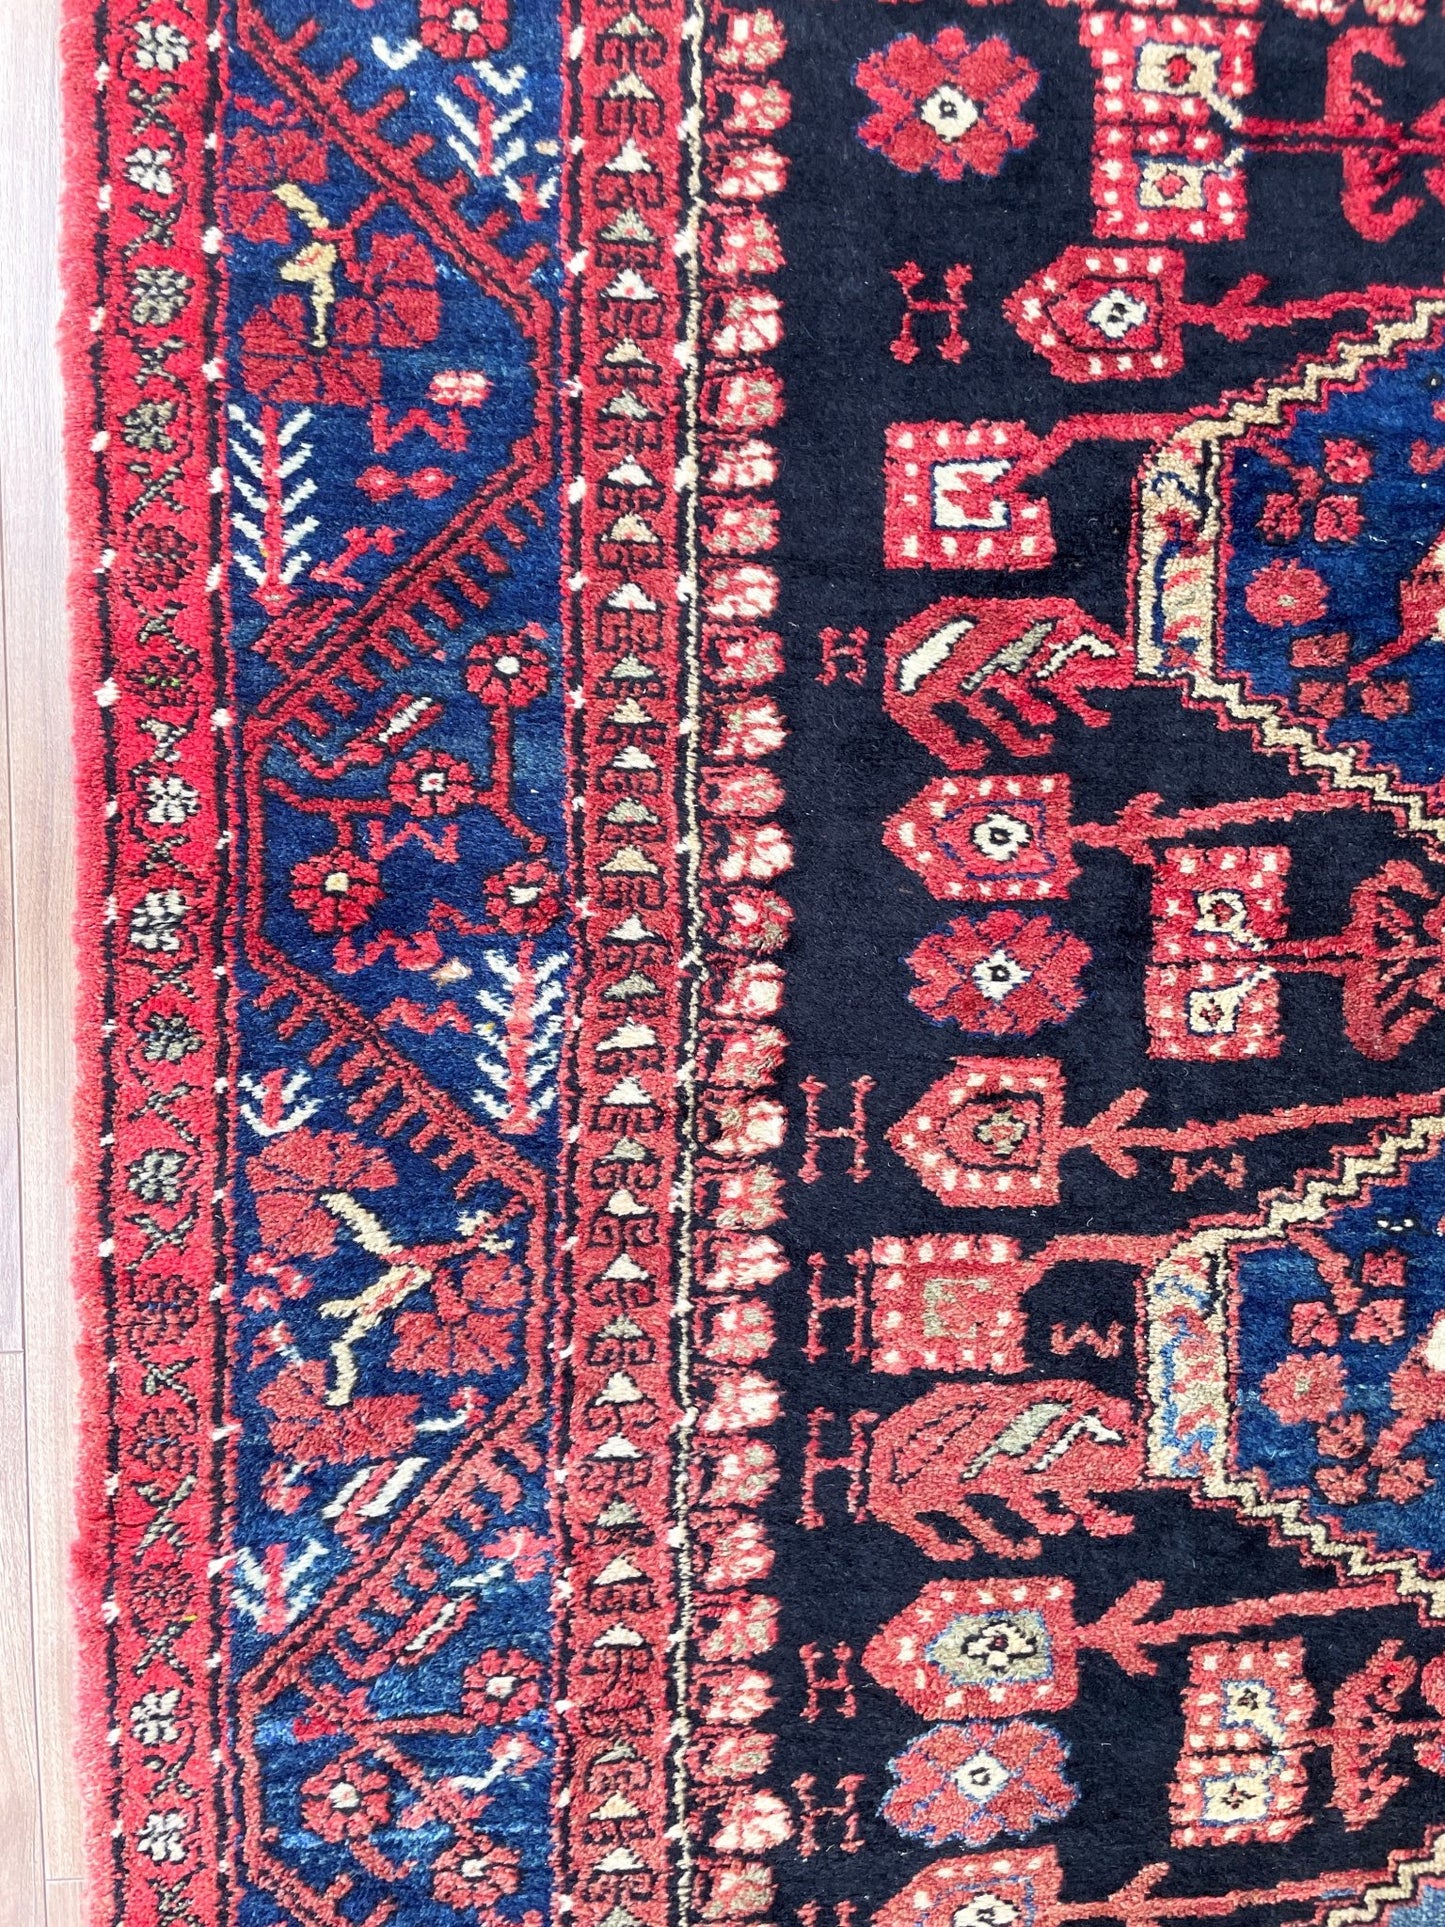 KULA handmade wool vintage Turkish rug shop san francisco bay area berkeley. Oriental rug shop palo alto. Buy rug online